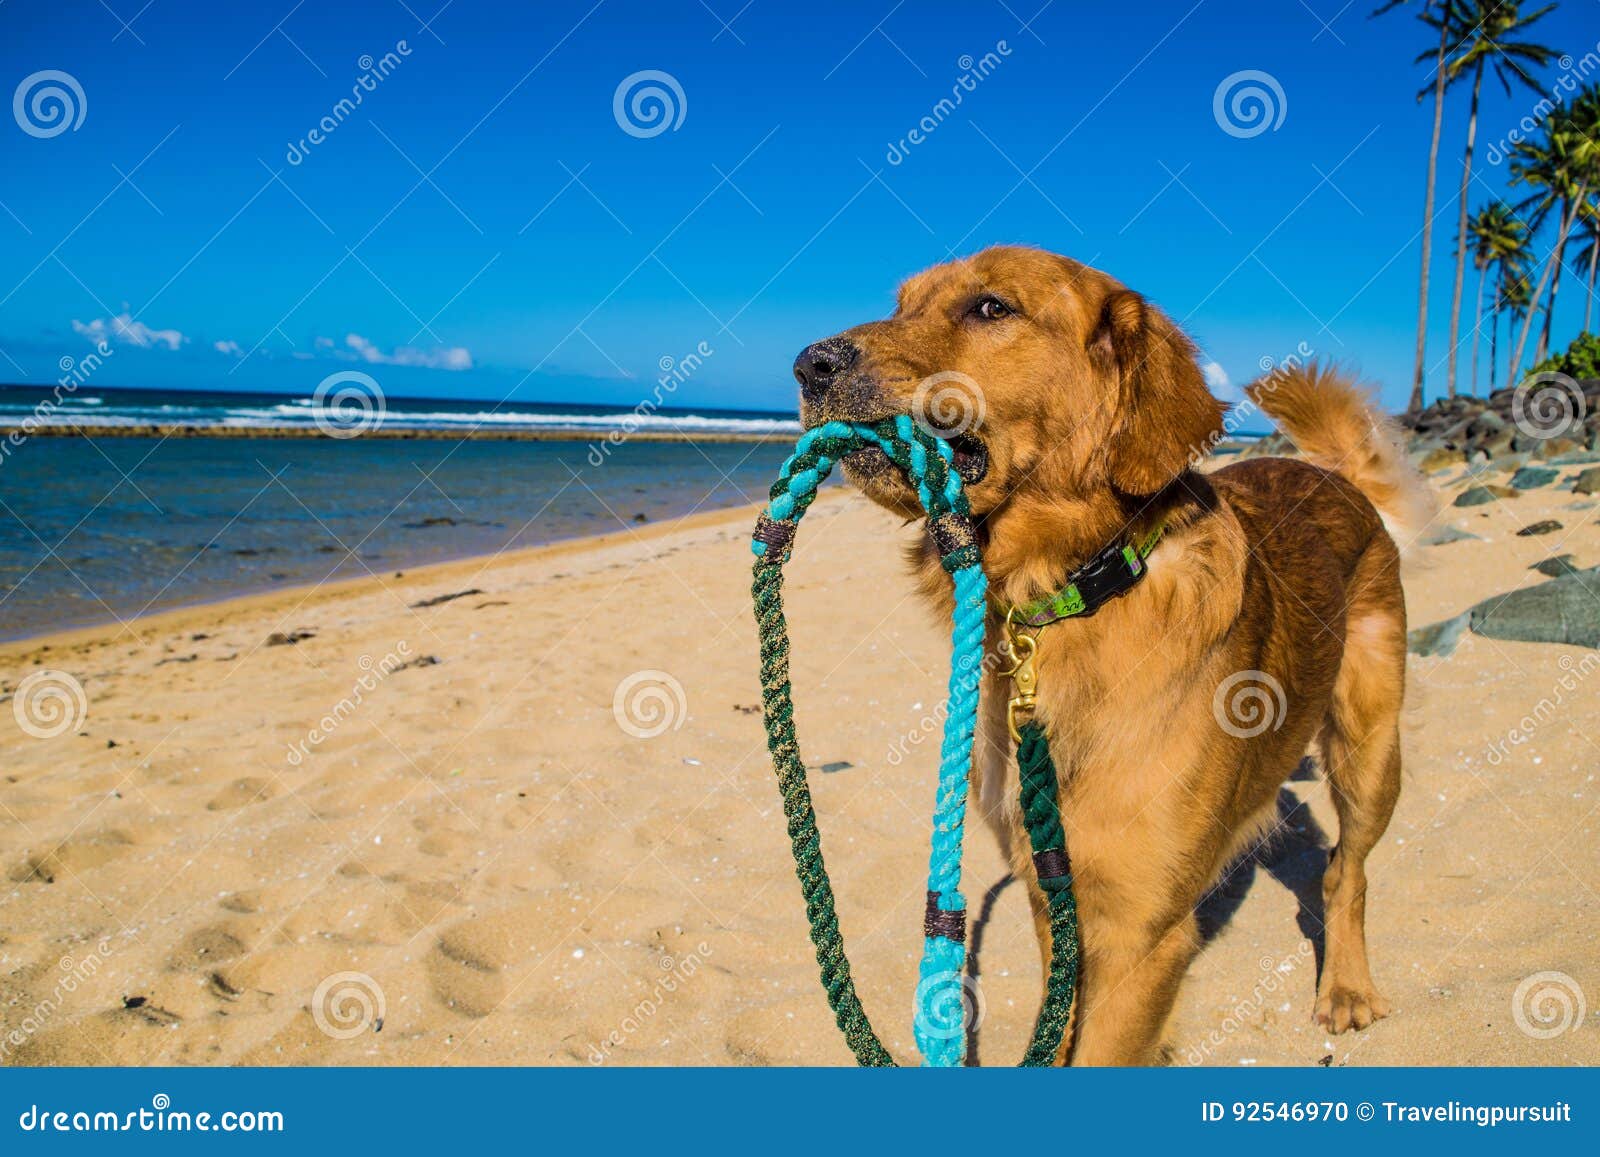 golden retriever puppy on the shore beach